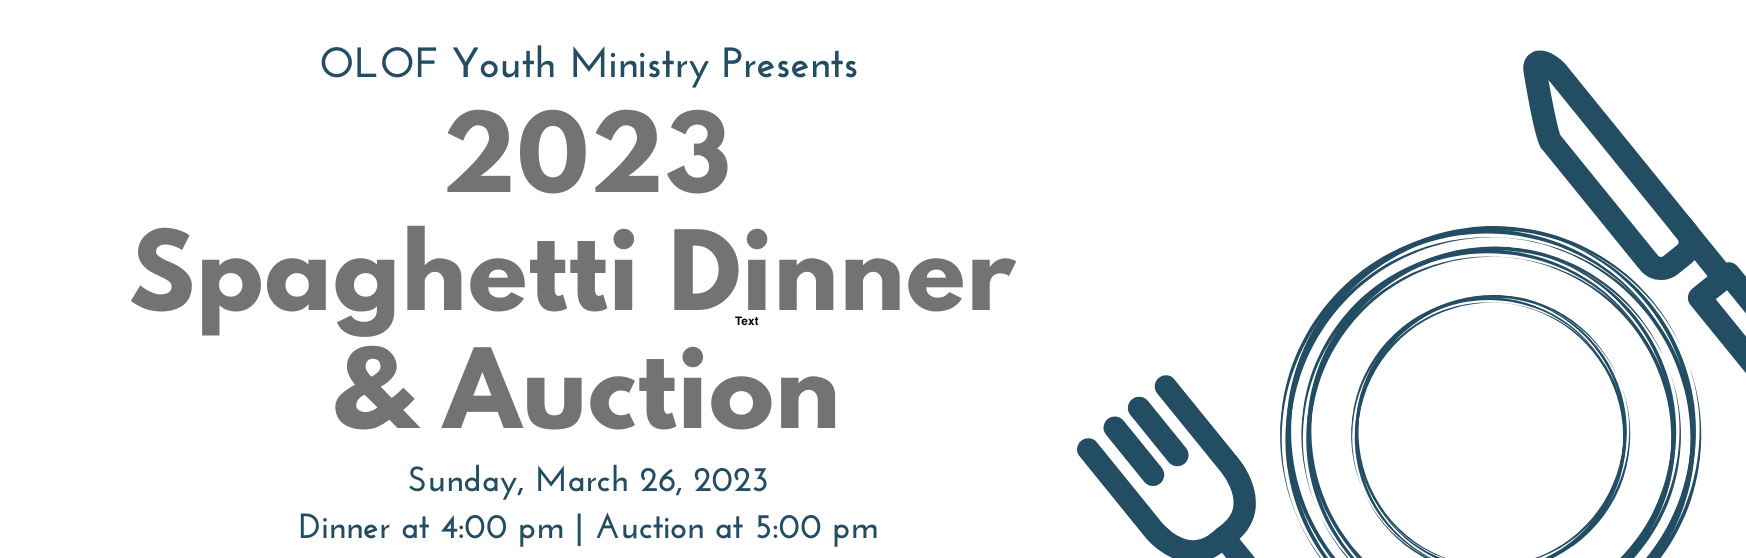 26th Annual Spaghetti Dinner & Auction | Cena y Subasta Anual